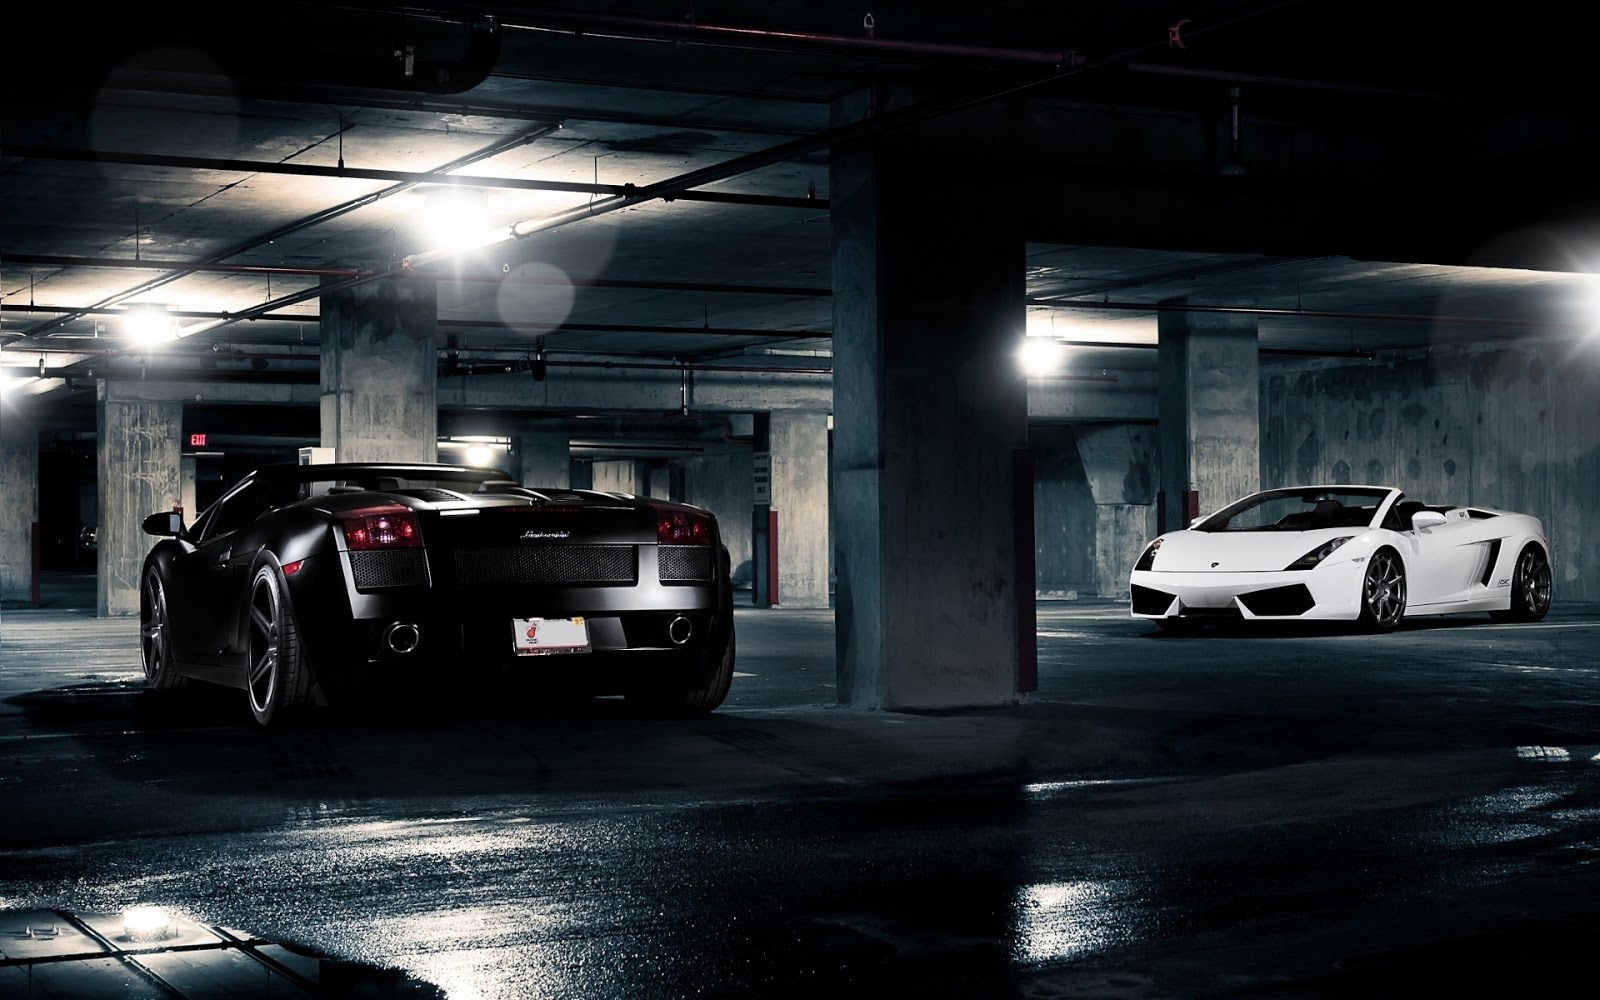 Luxury Lamborghini Cars Gallardo Black